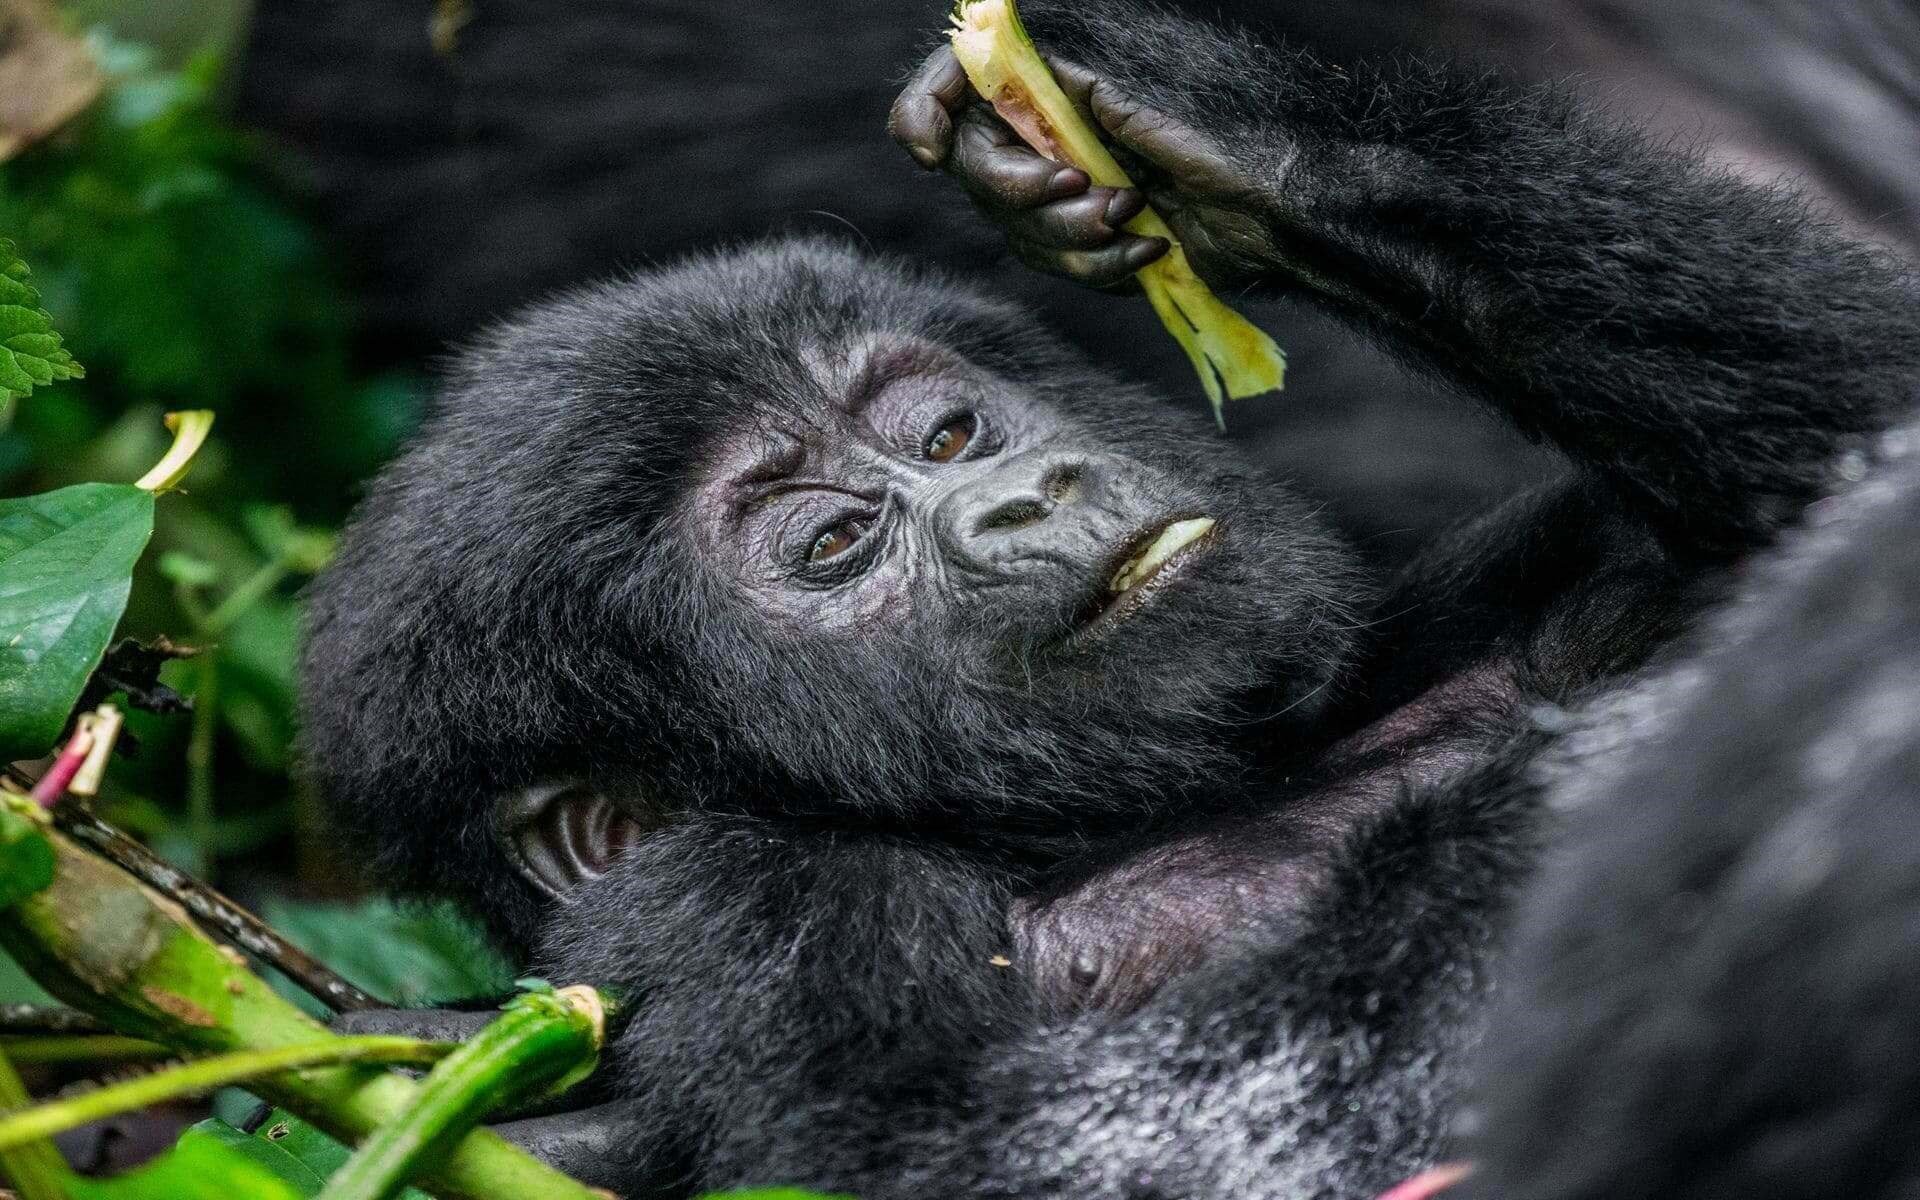 Guide to the Gorilla Habituation Experience in Uganda